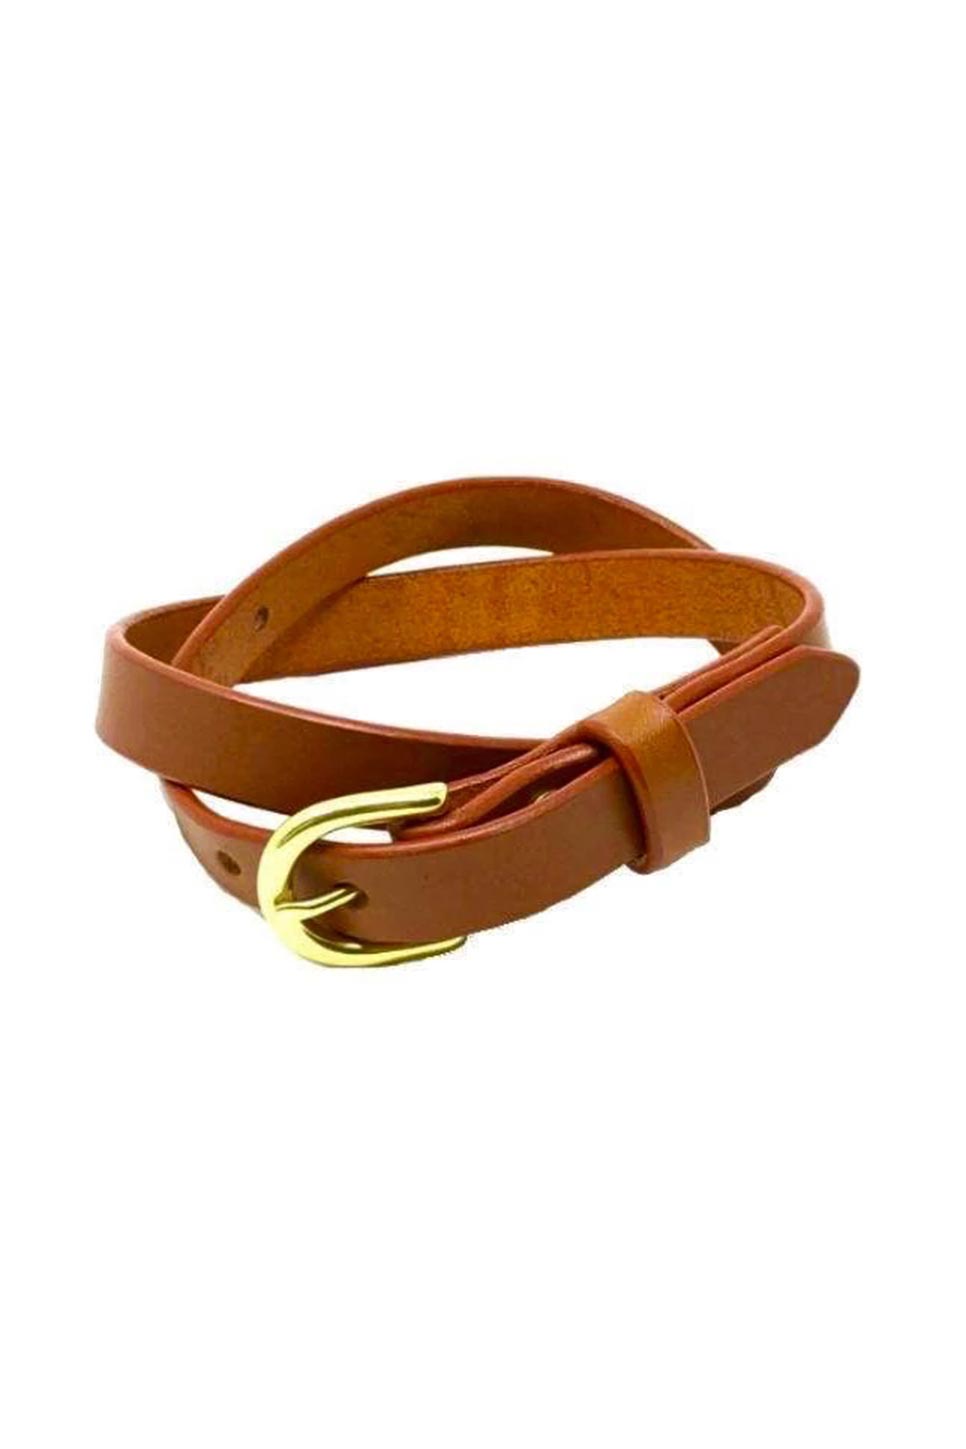 Last State Leather - Everyday 1" Leather Belt - Chestnut/Brass